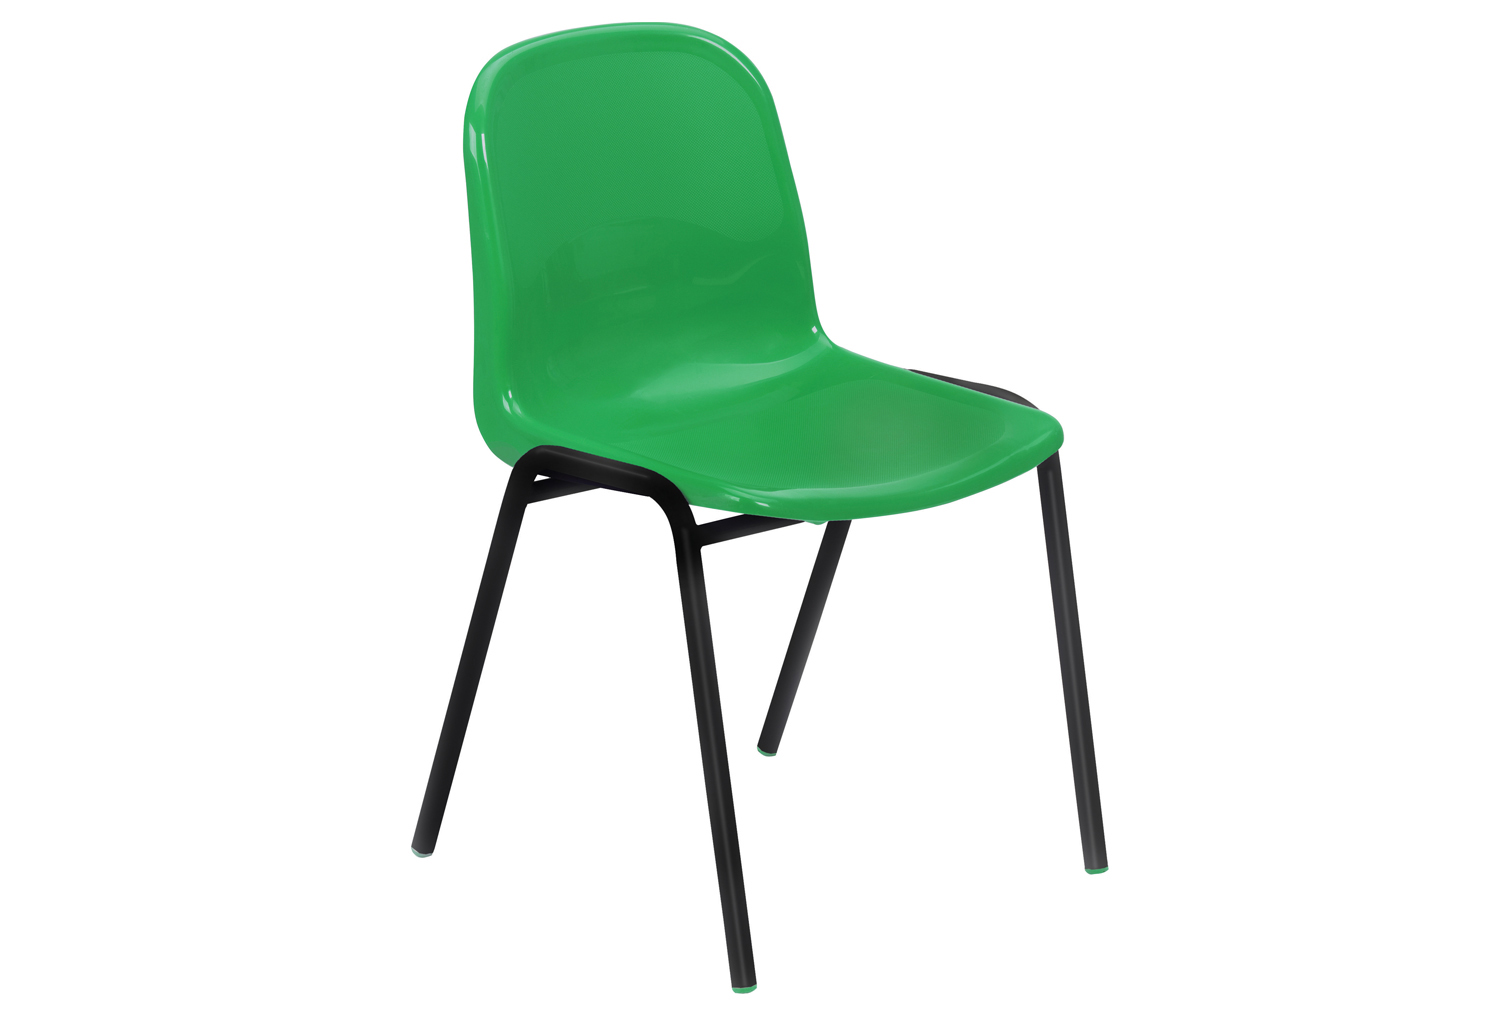 Qty 8 - Proform Harmony Classroom Chair, 14+ Years - 40wx38dx46h (cm), Black Frame, Green